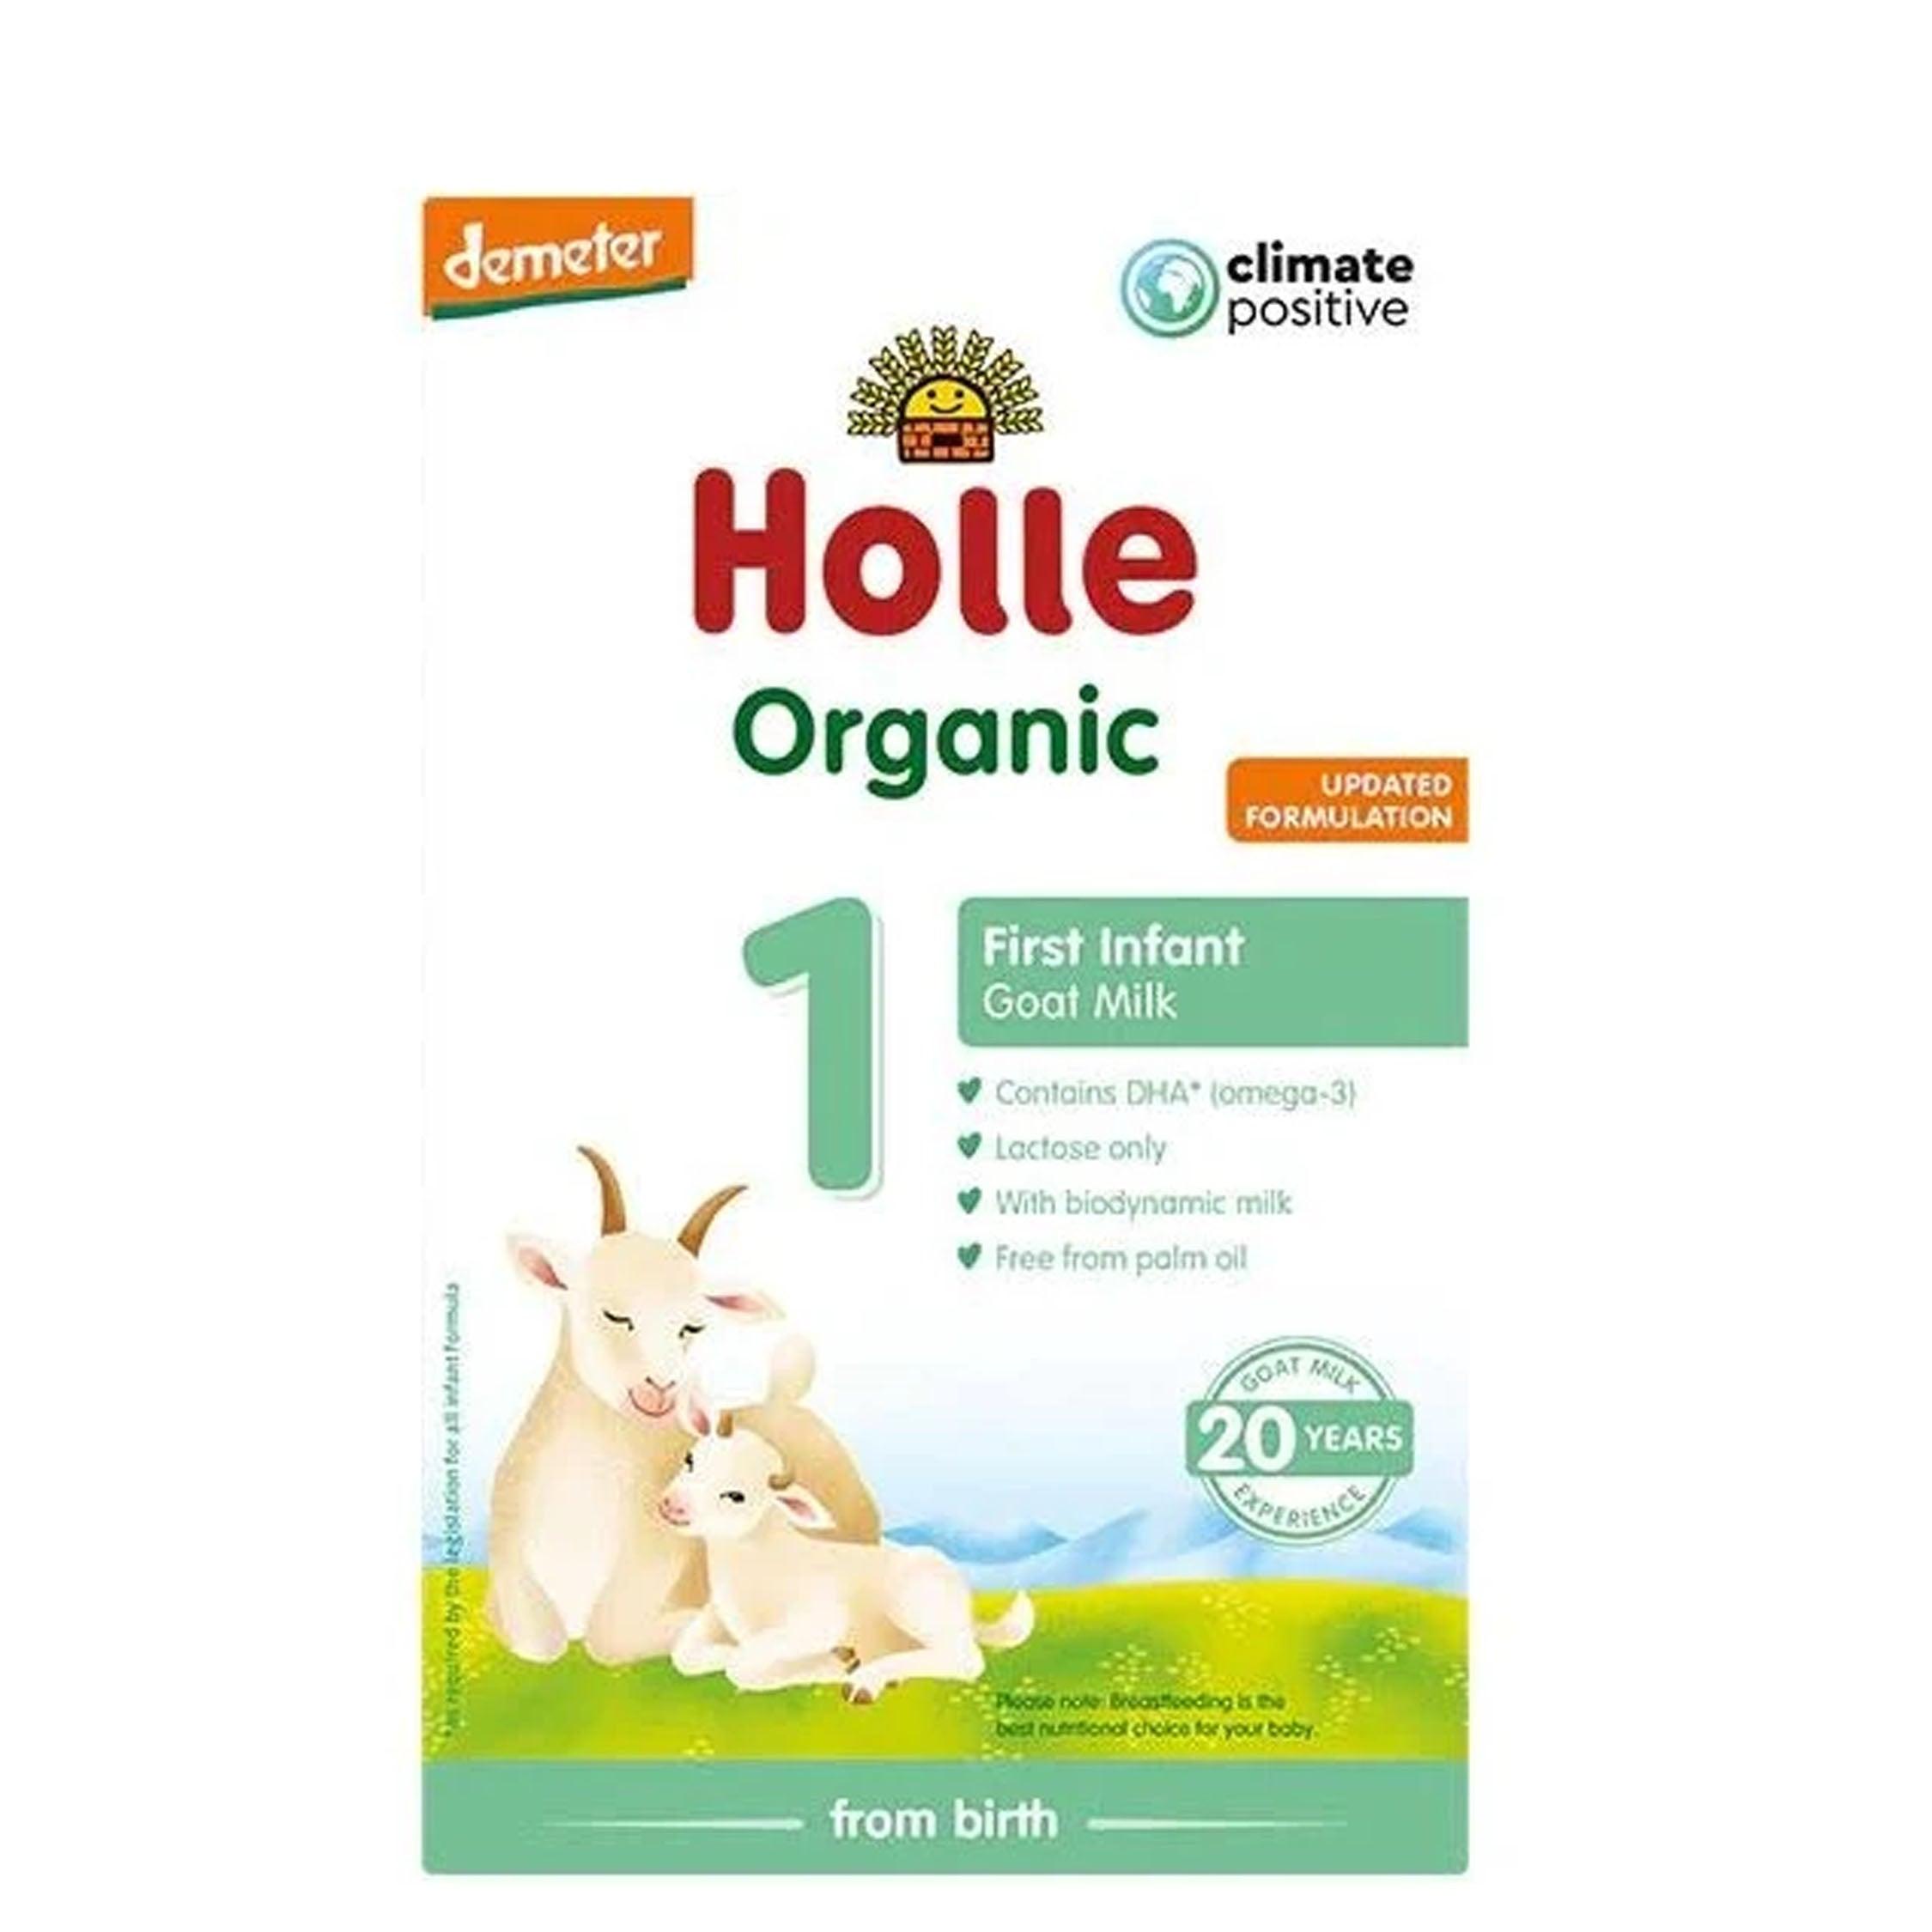 Jovie Organic Infant Goat Milk - Stage 1 (12 cans)